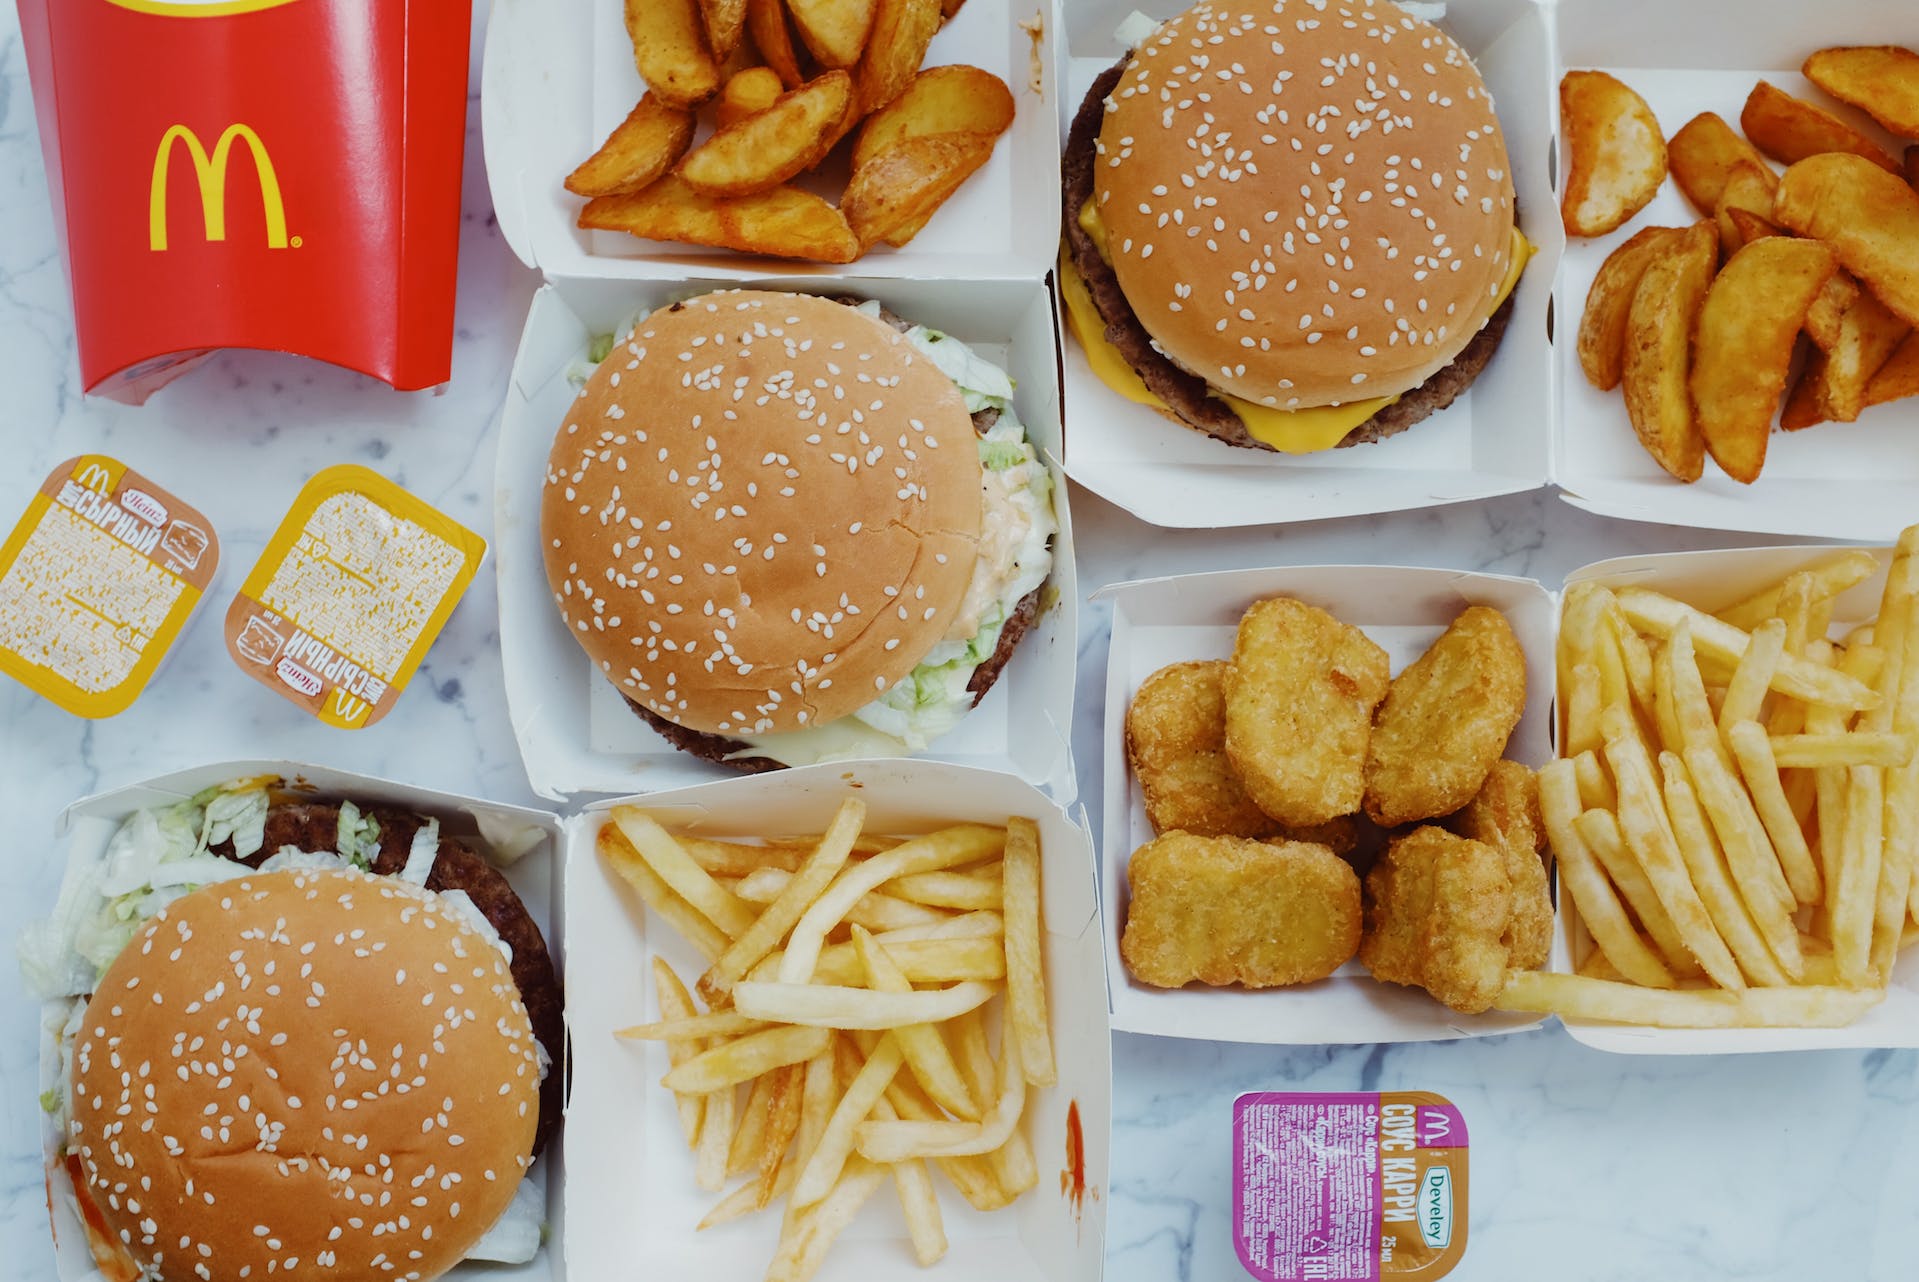 Food from McDonald's | Source: Pexels